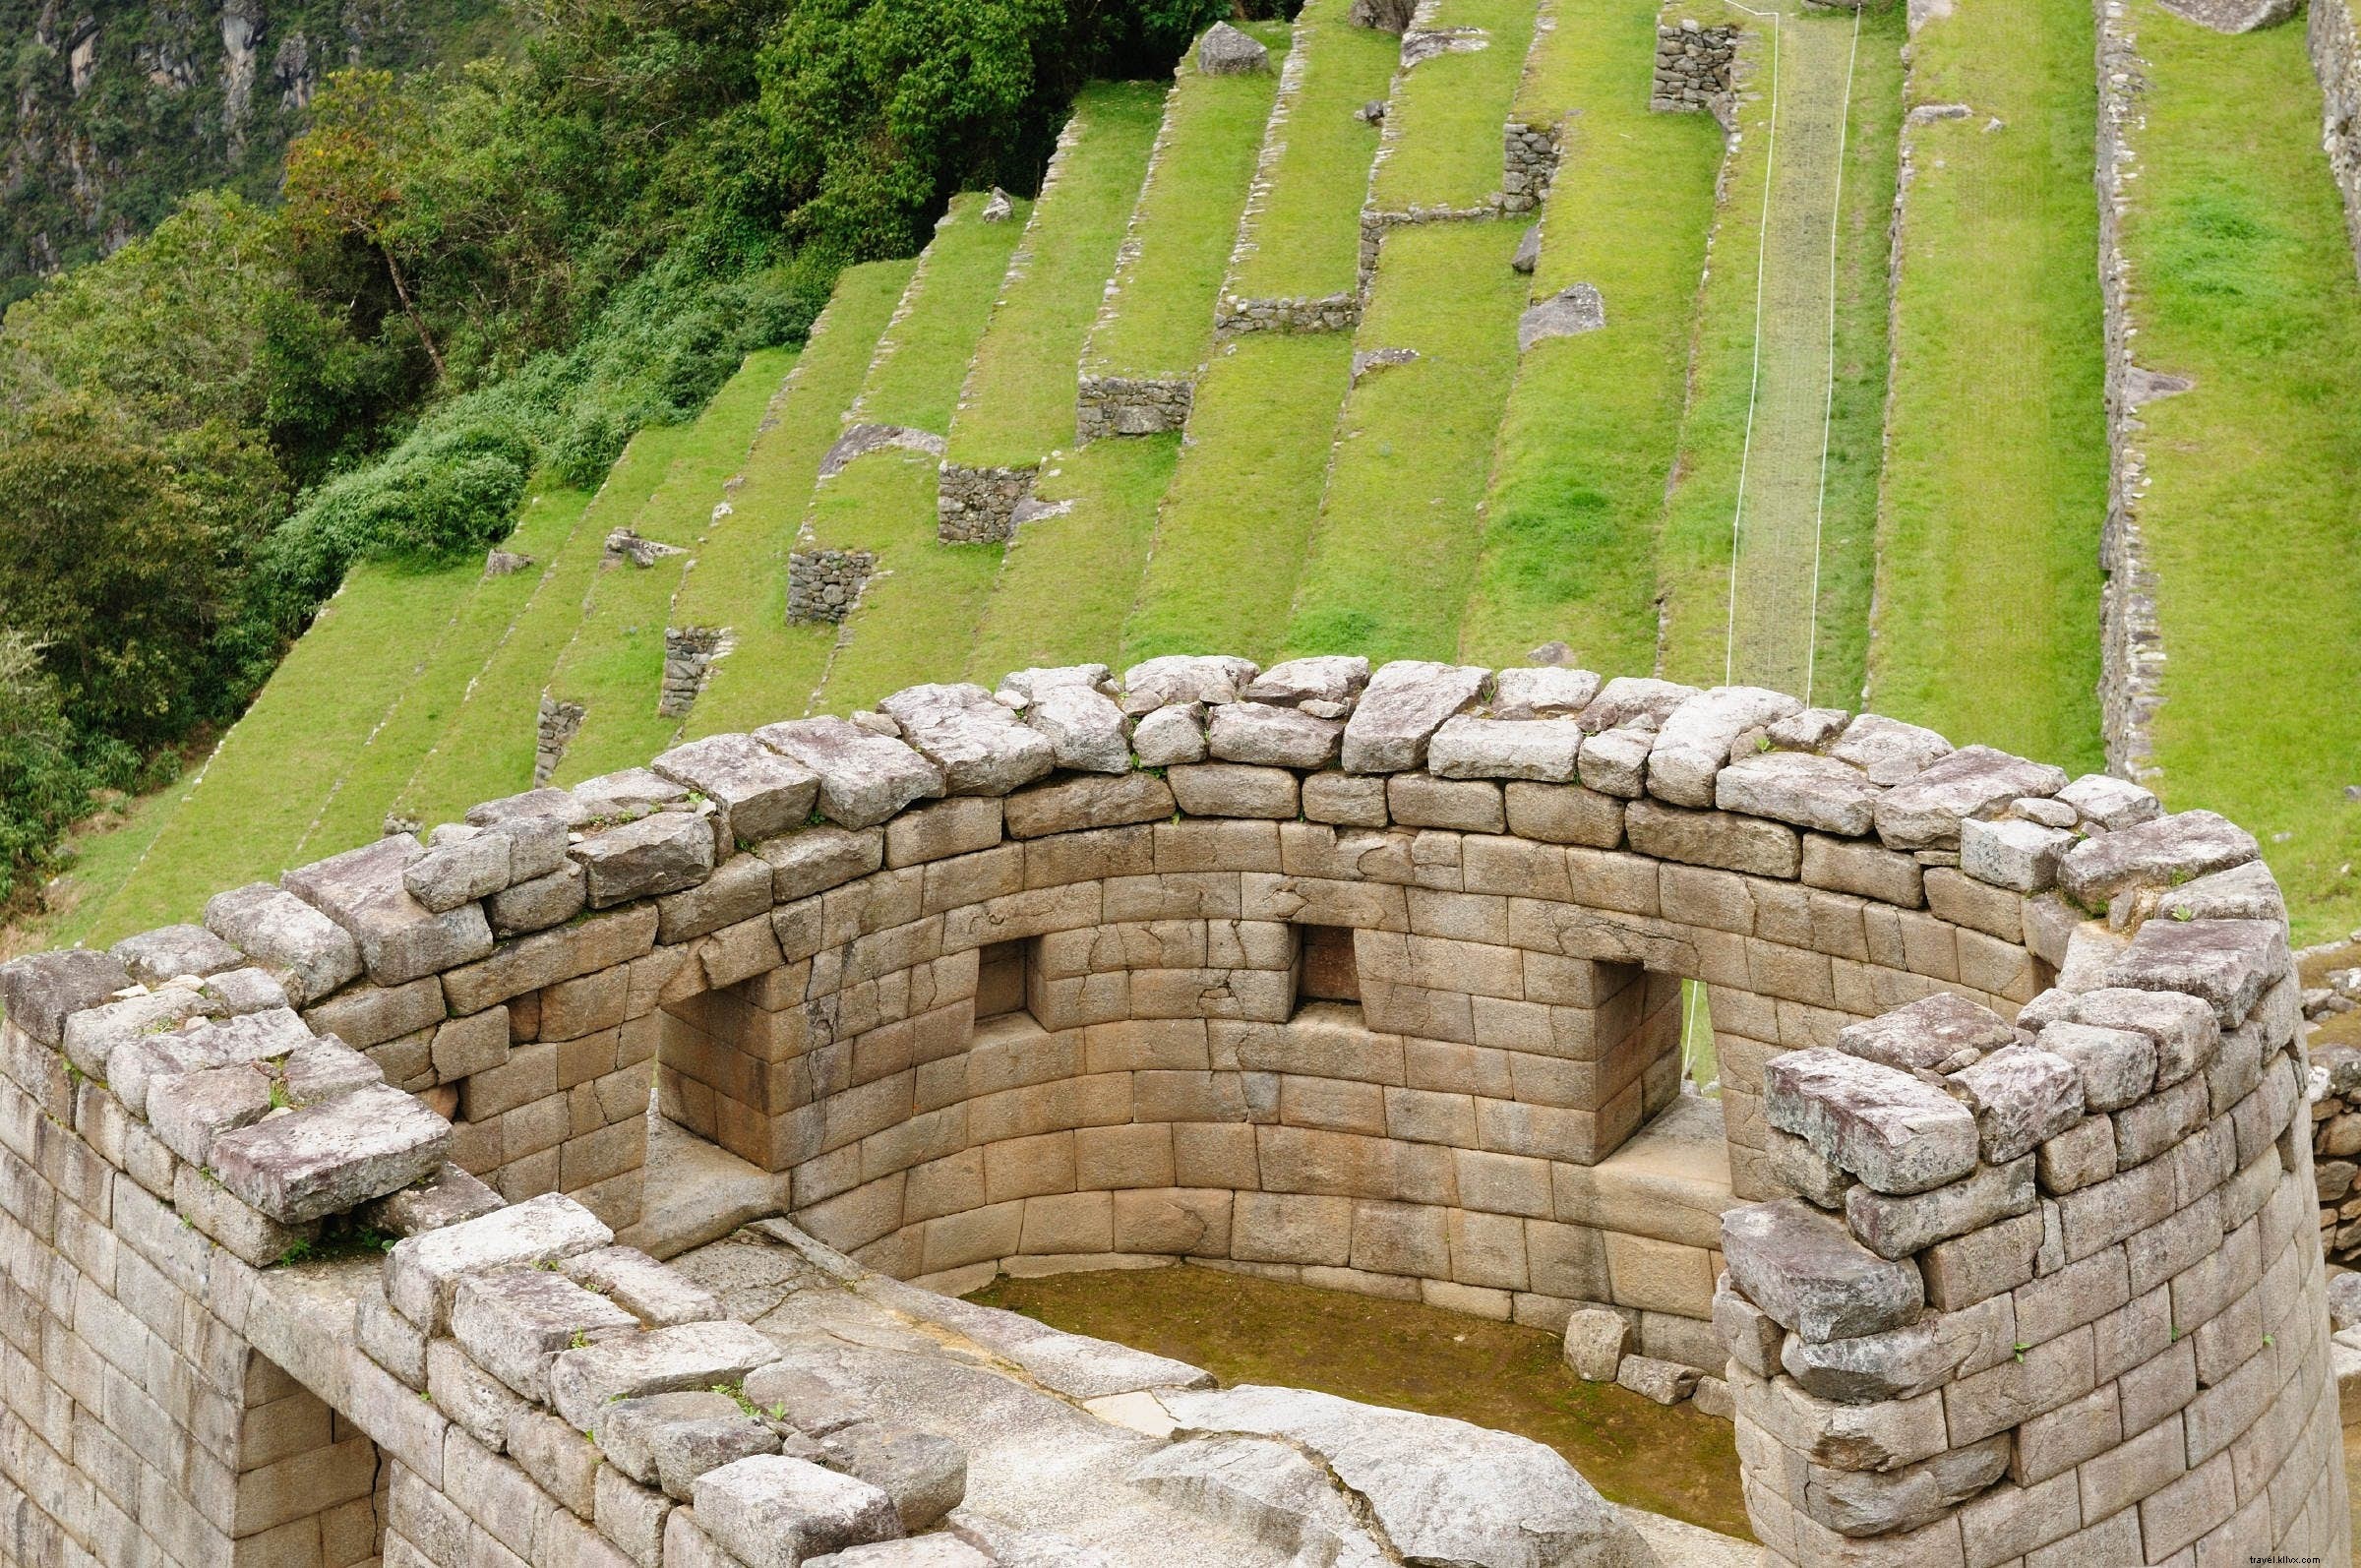 Ingin mendaki Inca Trail ke Machu Picchu pada tahun 2020? Mulai rencanakan sekarang 